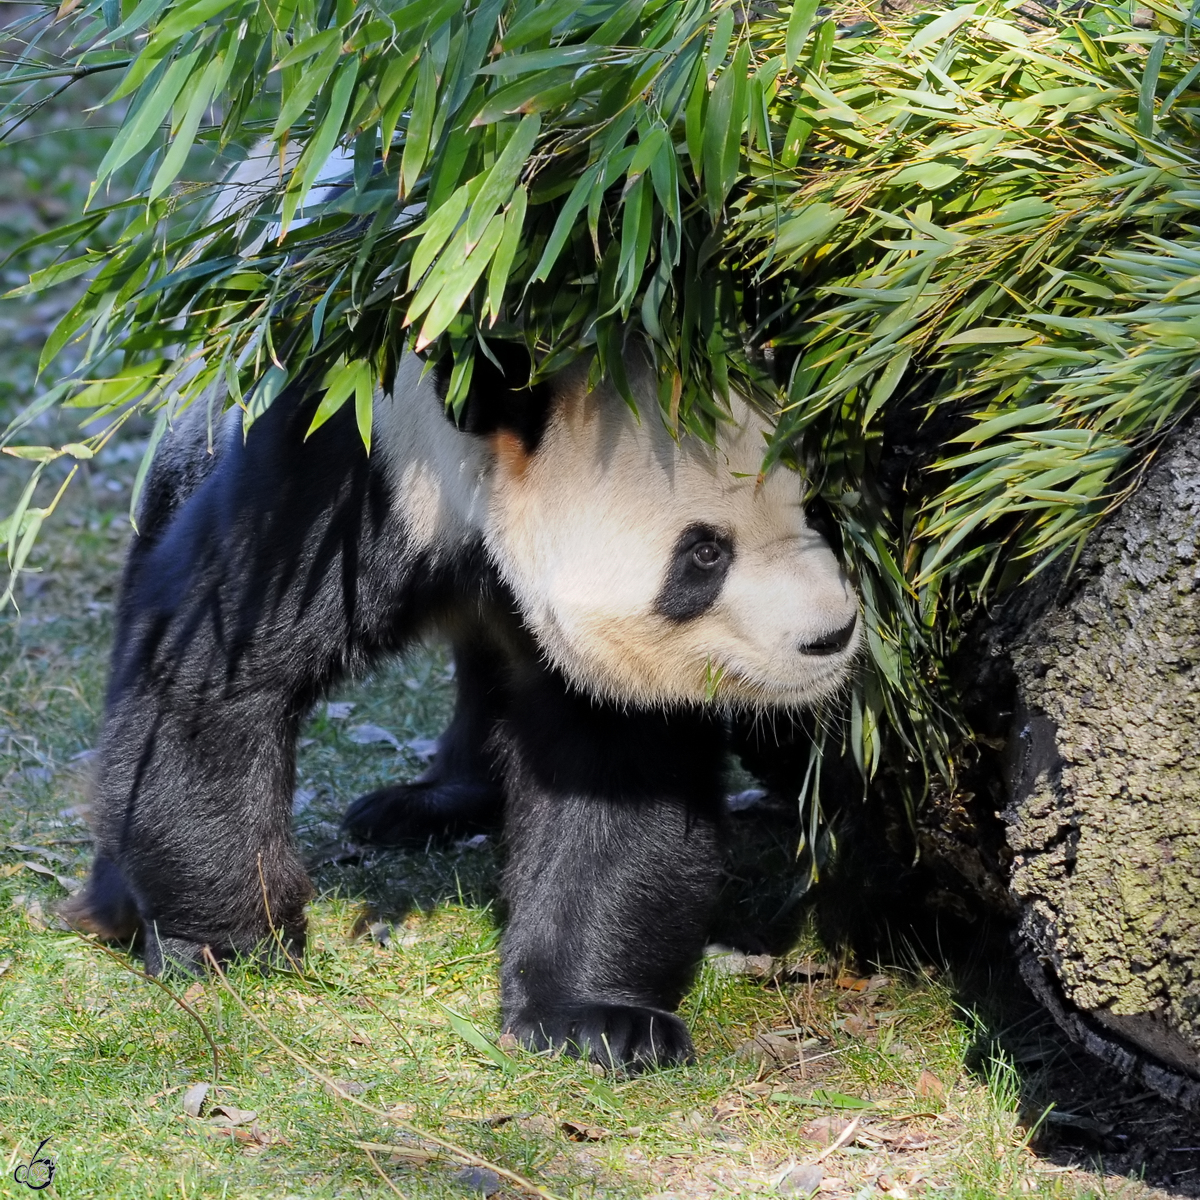 Ein Großer Panda kommt unter dem leckeren Bambus hervor. (Zoo Madrid, Dezember 2010)